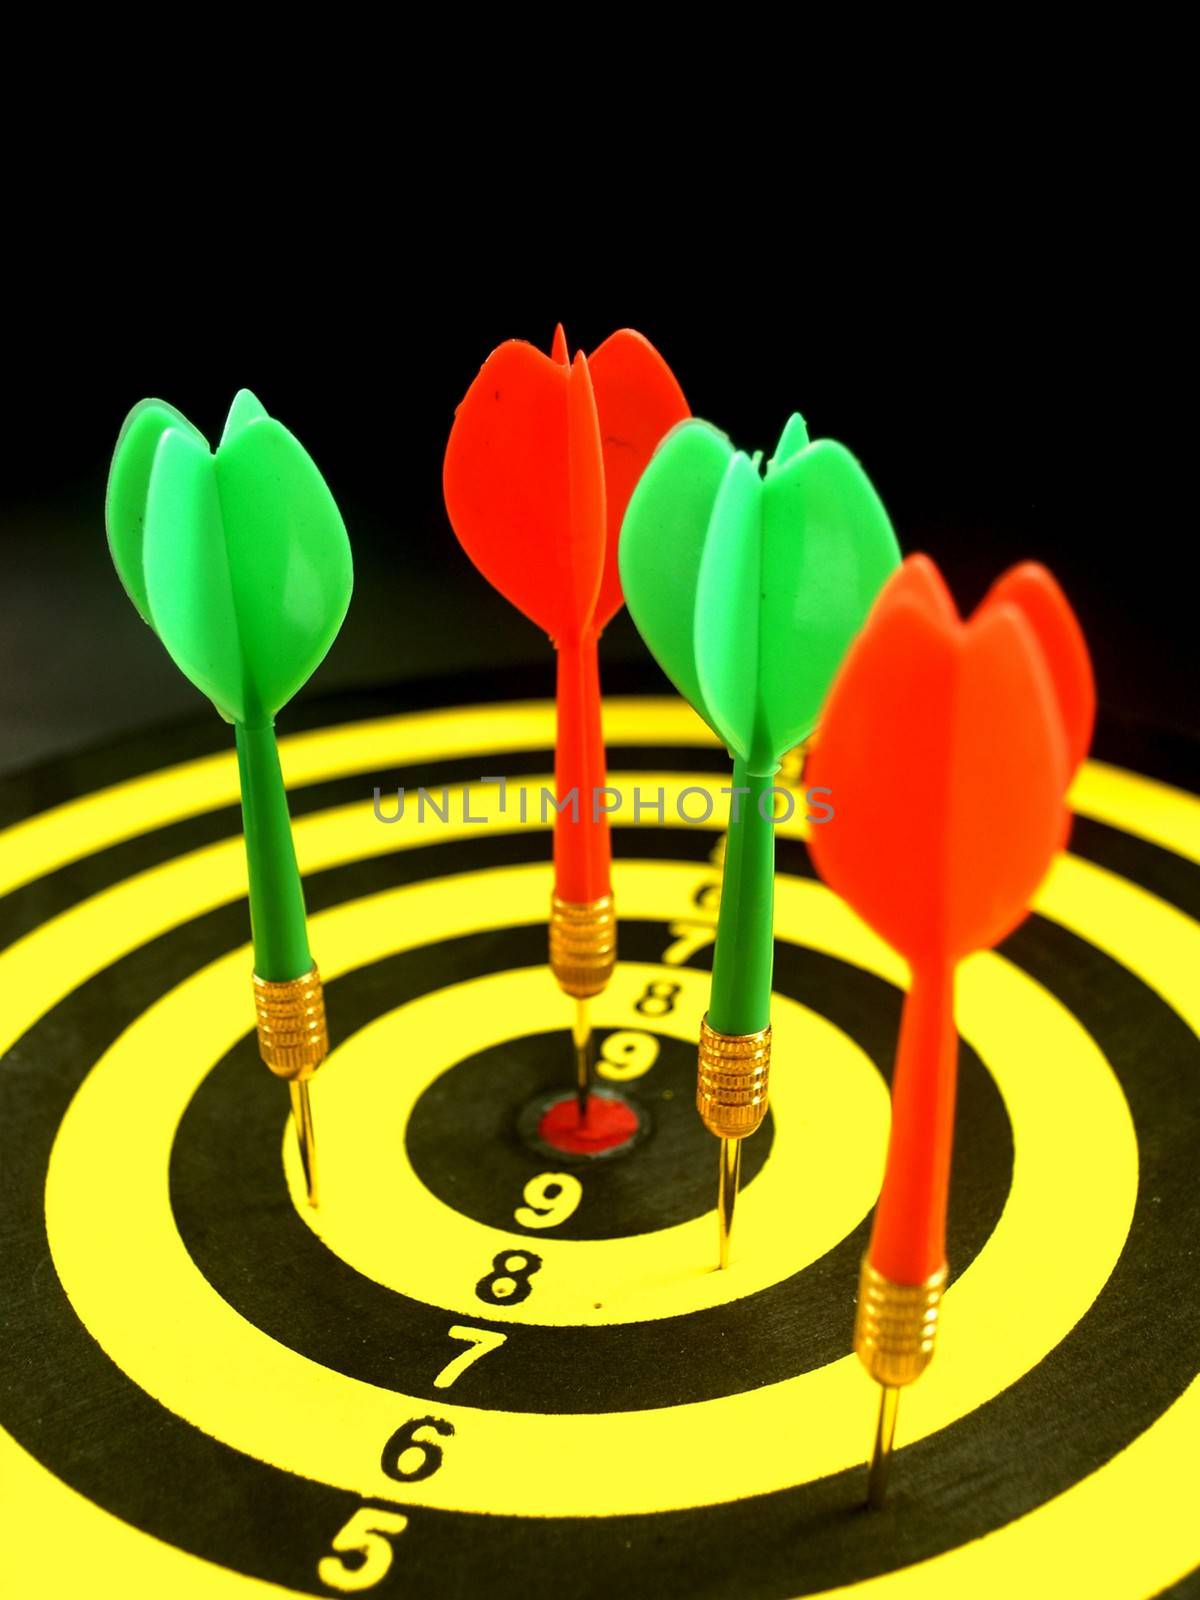 dartboard darts arrows in the target 